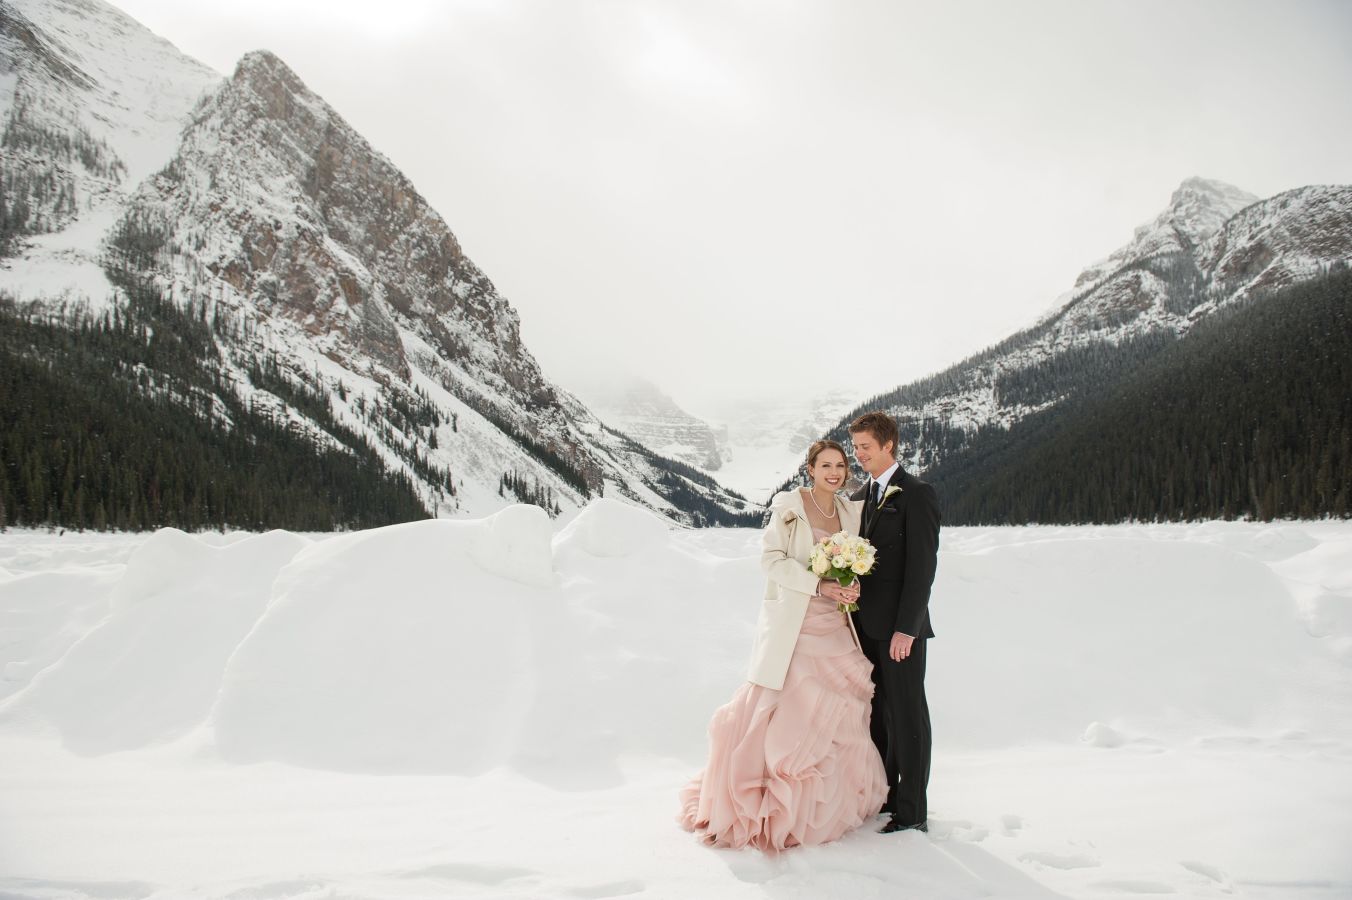 Winter Wedding Photos To Admire